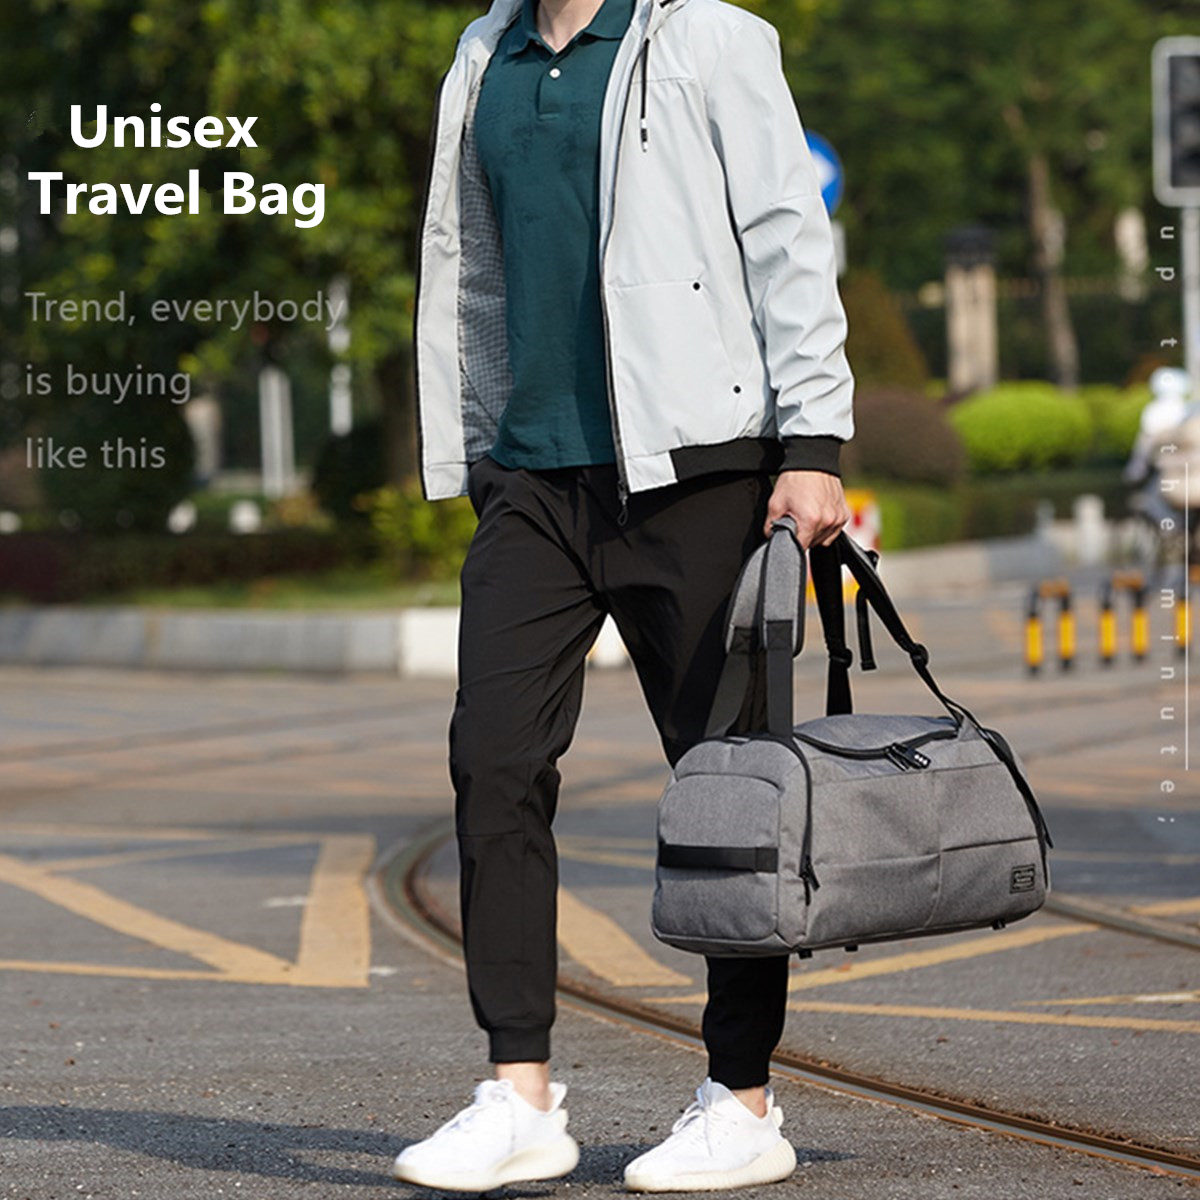 Outdoor-Men-Women-Luggage-Travel-Bag-Satchel-Shoulder-Gym-Sports-Handbag-with-Shoes-Storage-1279187-1